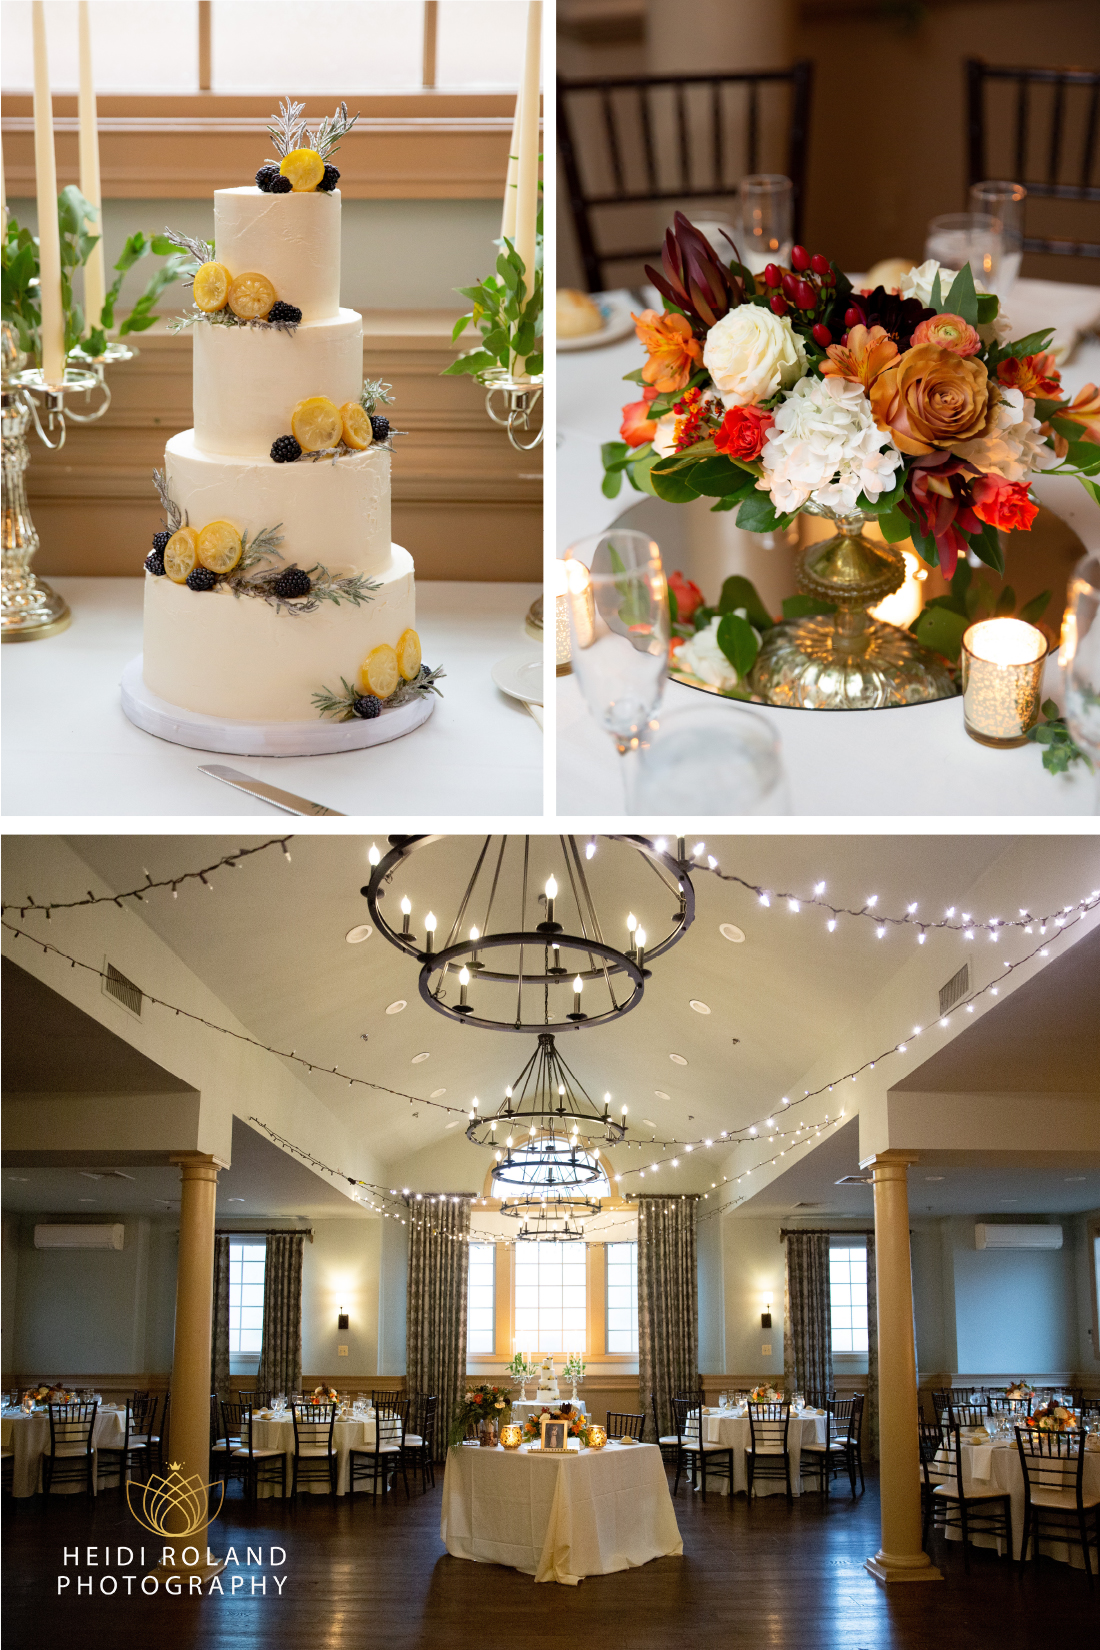 Wedding cake and floral arrangement for wedding reception at Joseph Ambler Inn